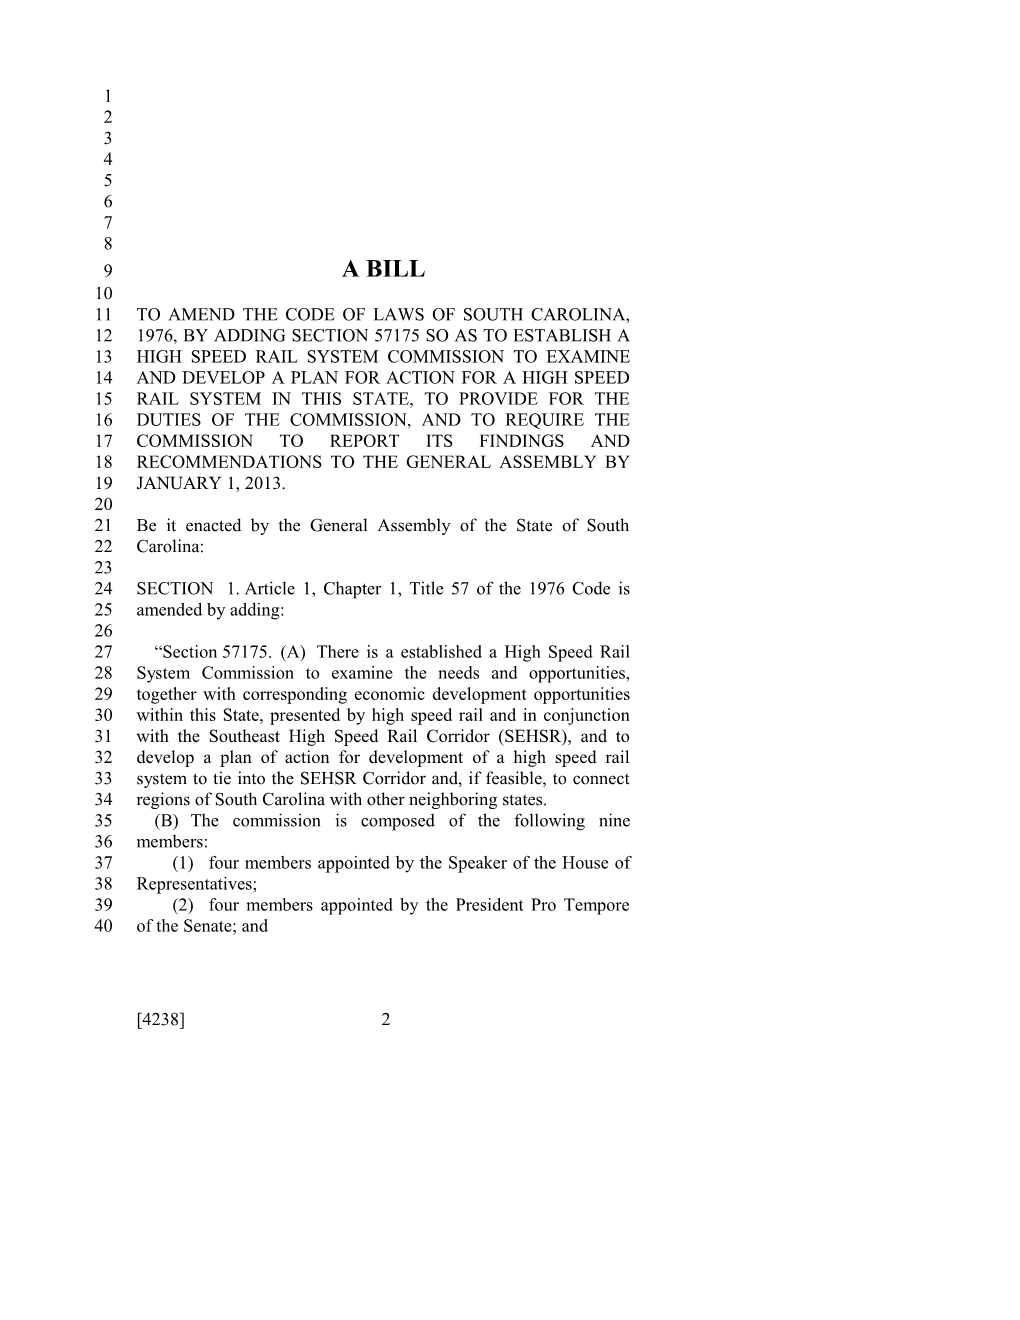 2011-2012 Bill 4238: High Speed Rail System Commission - South Carolina Legislature Online